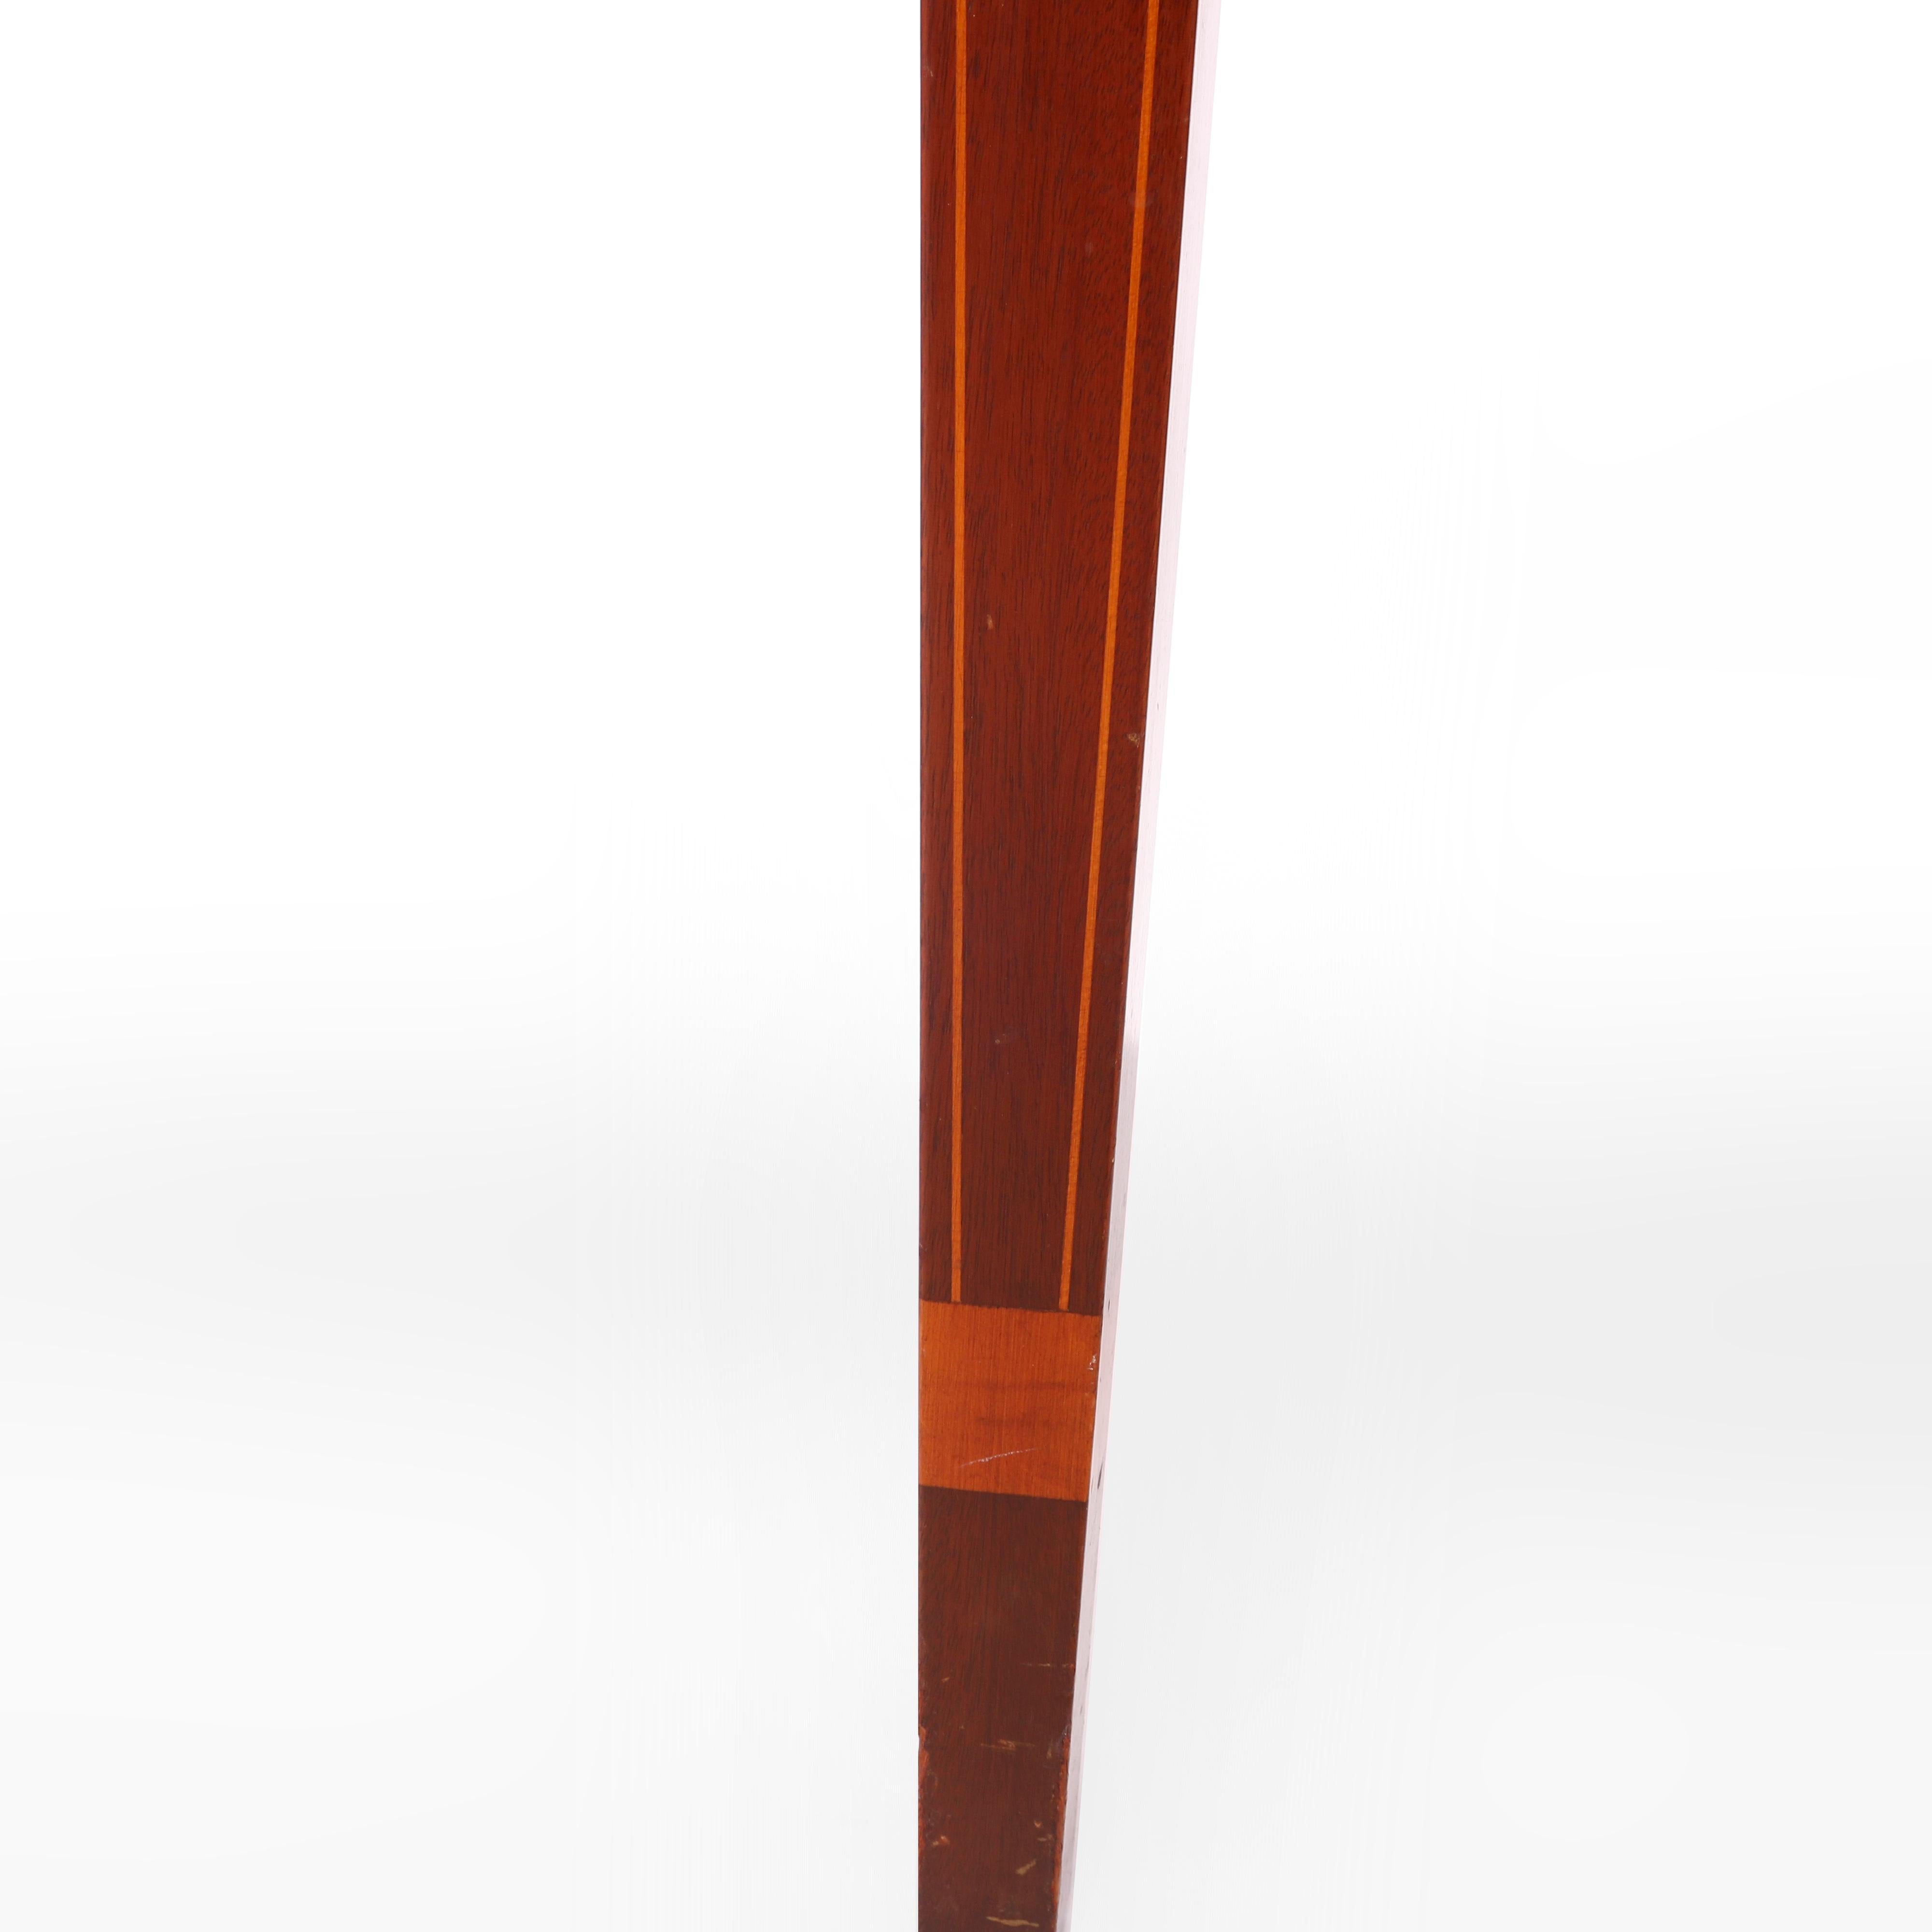 Antique Hepplewhite Style Kittinger Flame Mahogany Demilune Sideboard c1930 For Sale 9